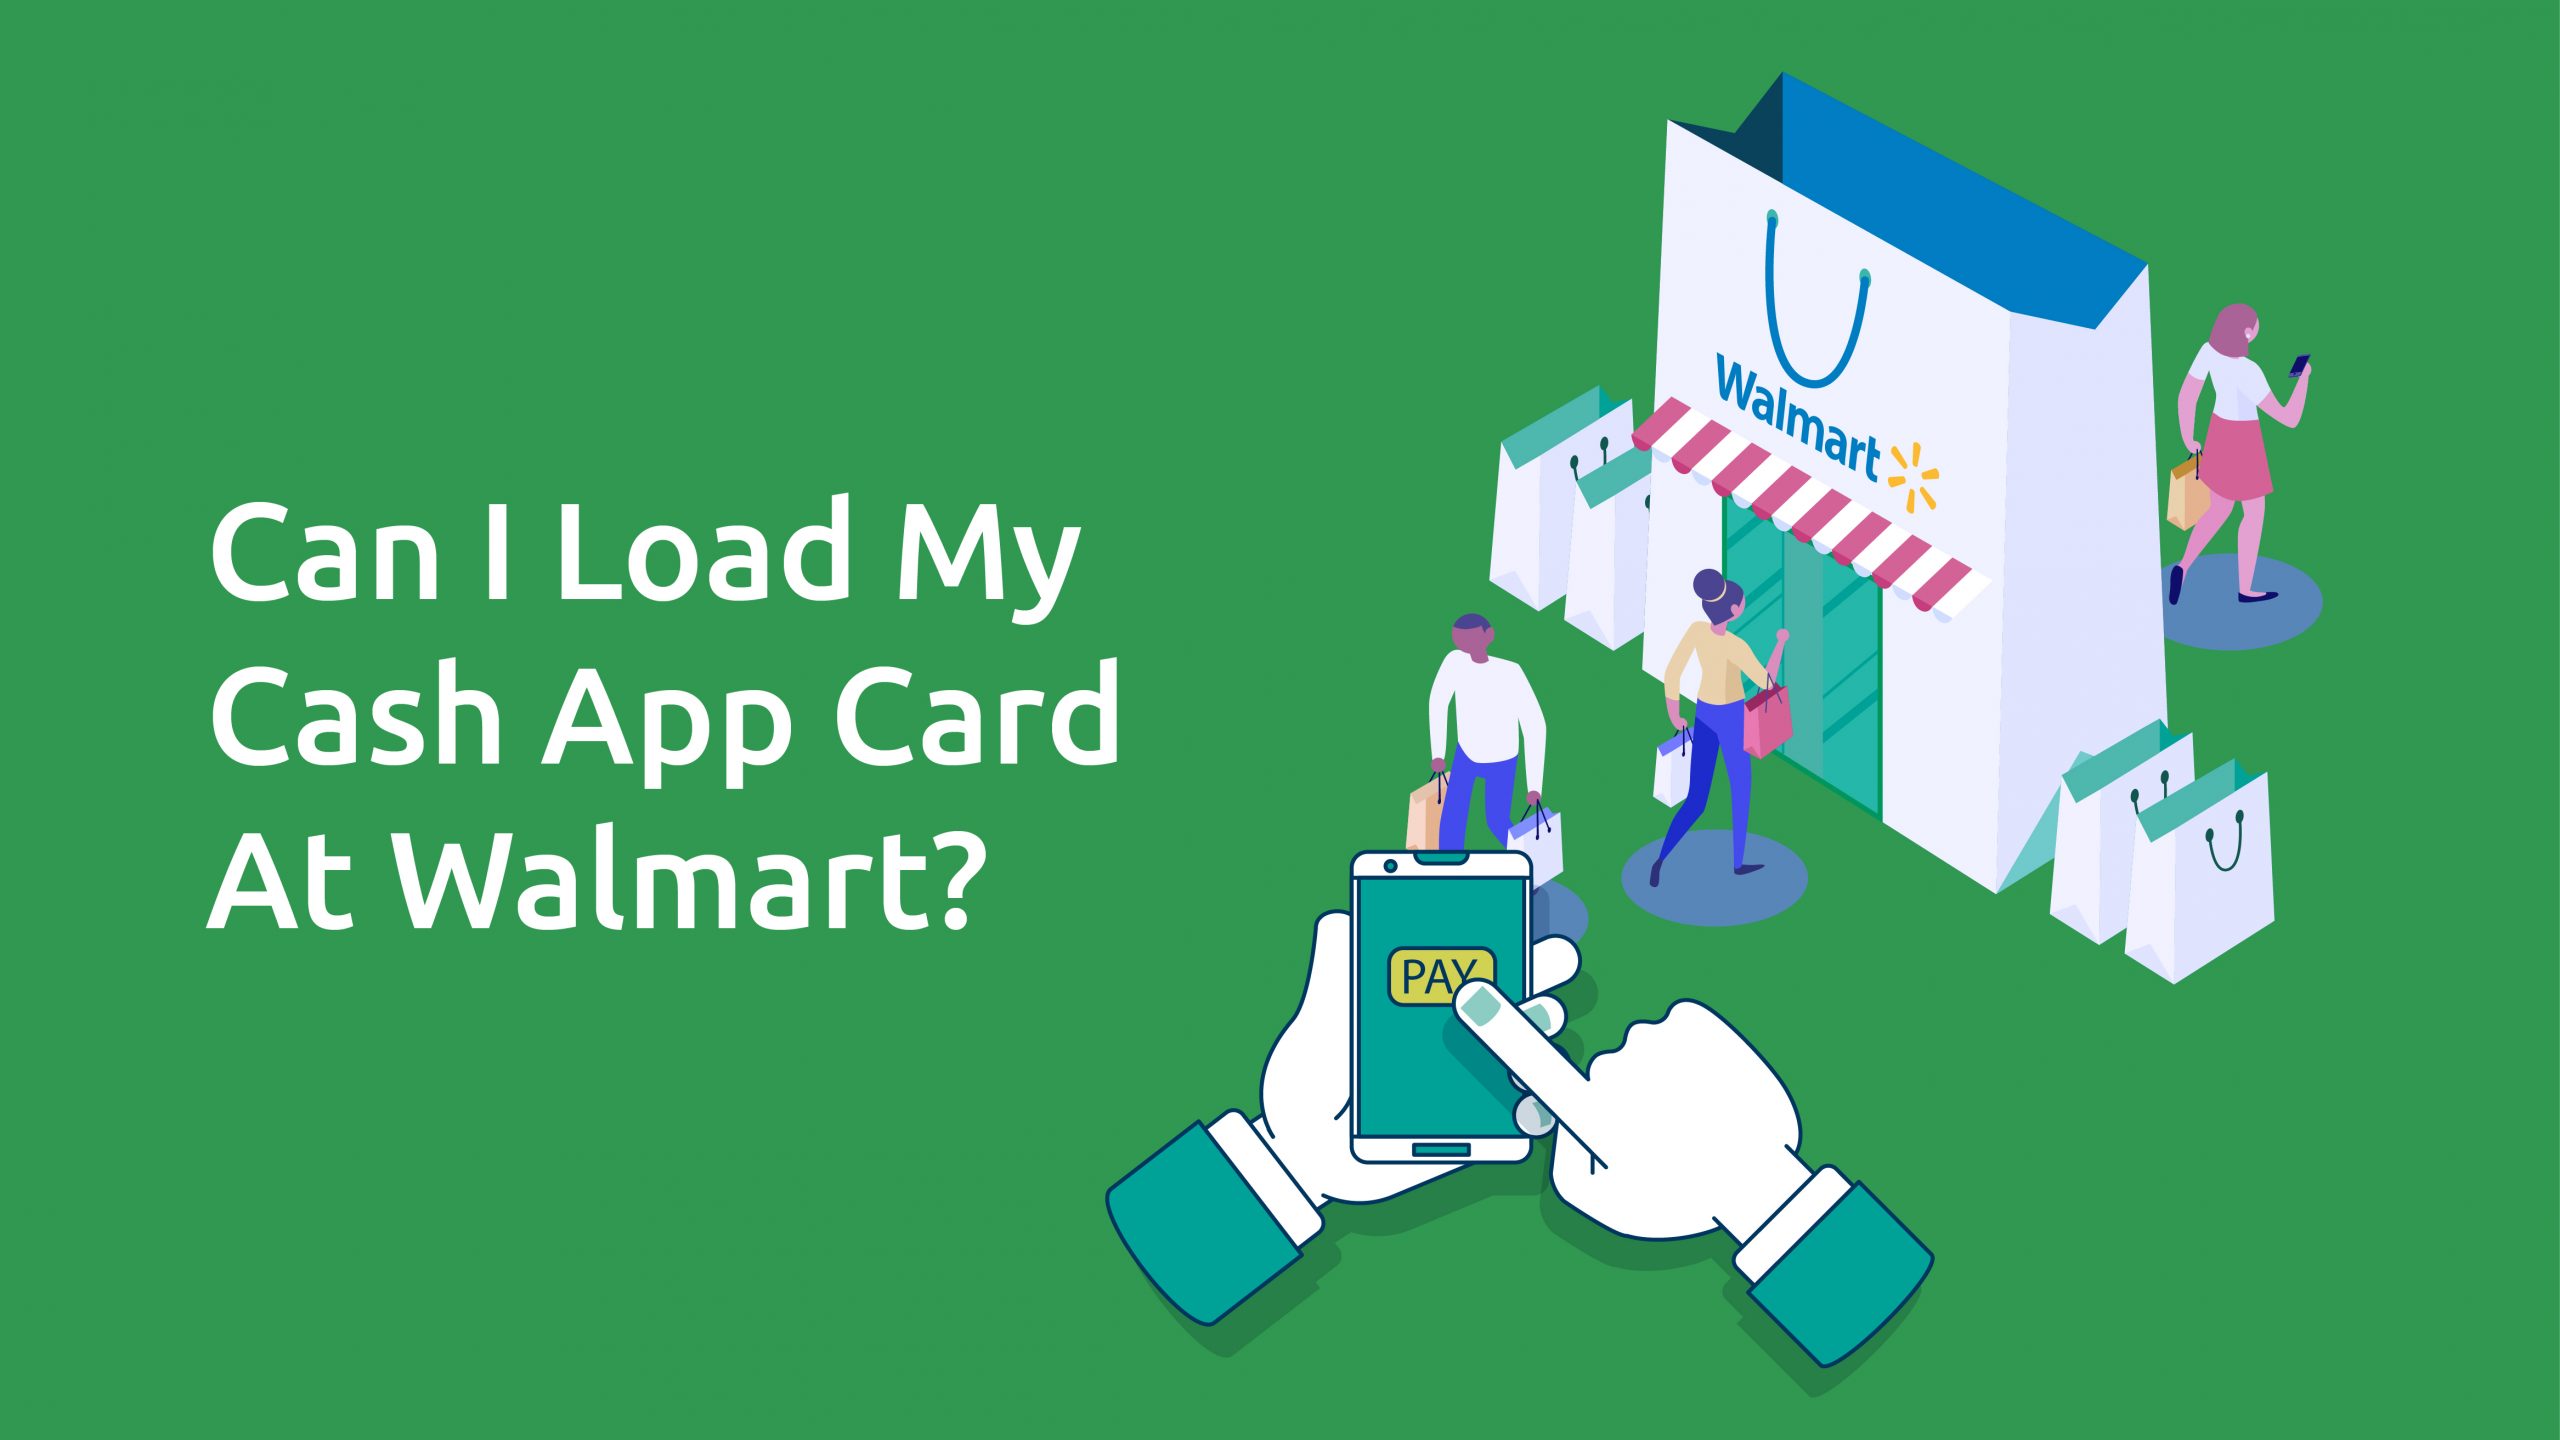 Adding money to a Walmart Cash App